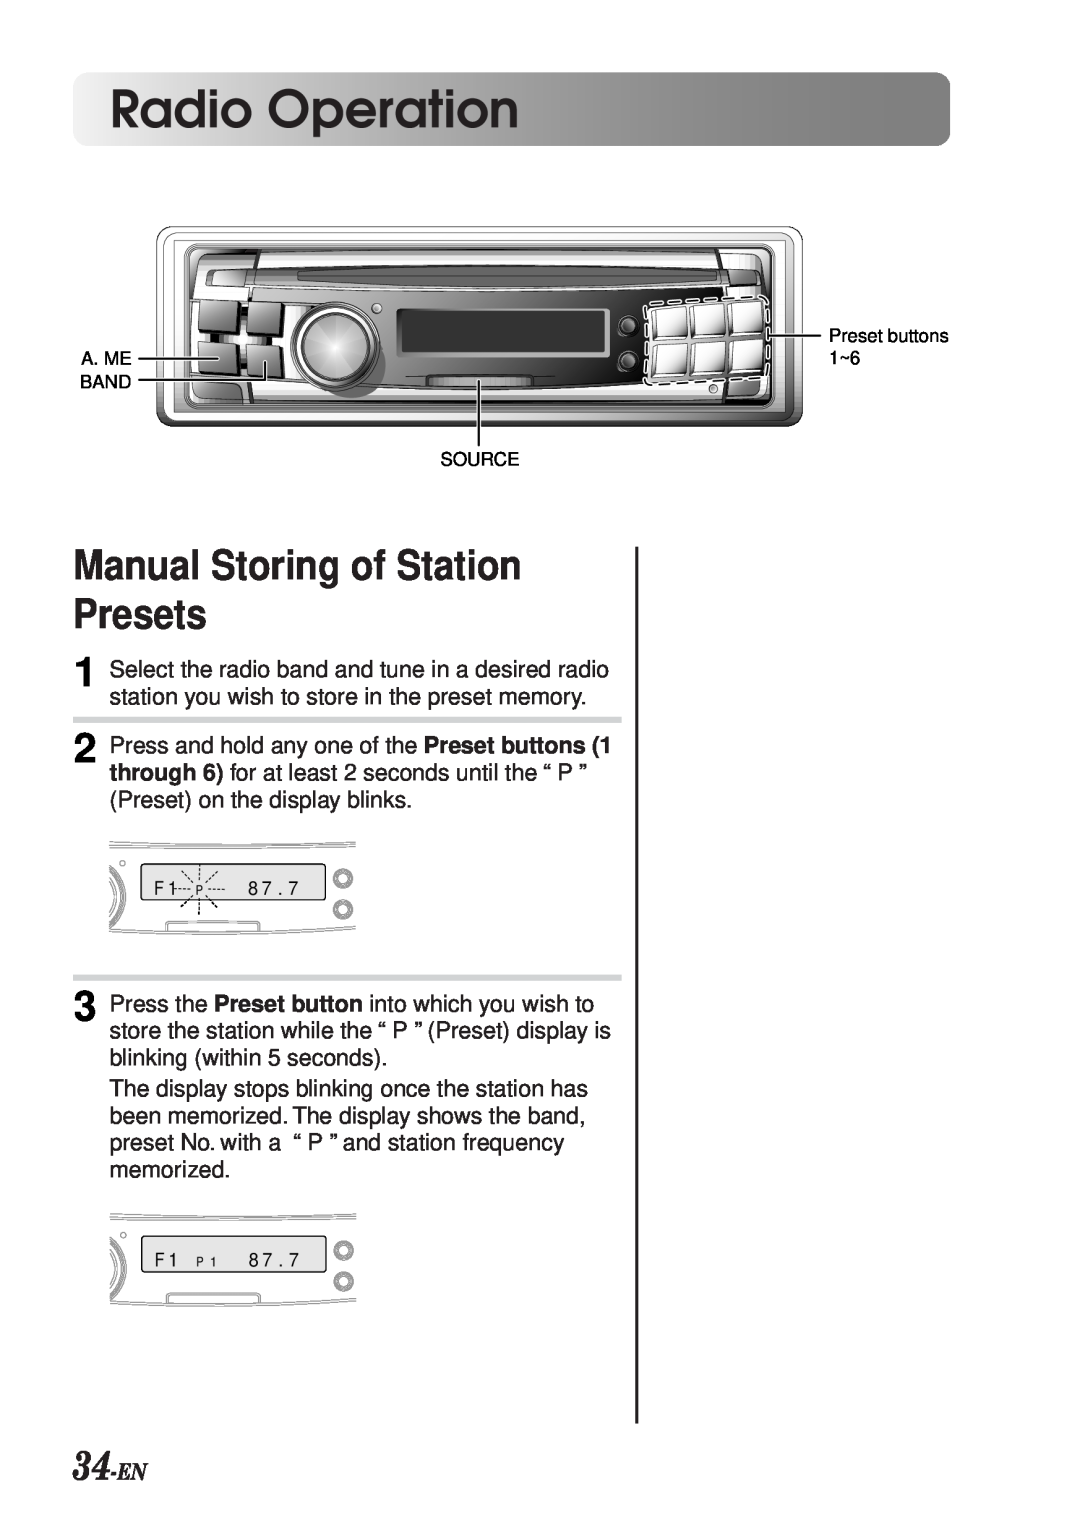 Alpine CDA-7990 manual Manual Storing of Station Presets, 34-EN, Radio Operation 